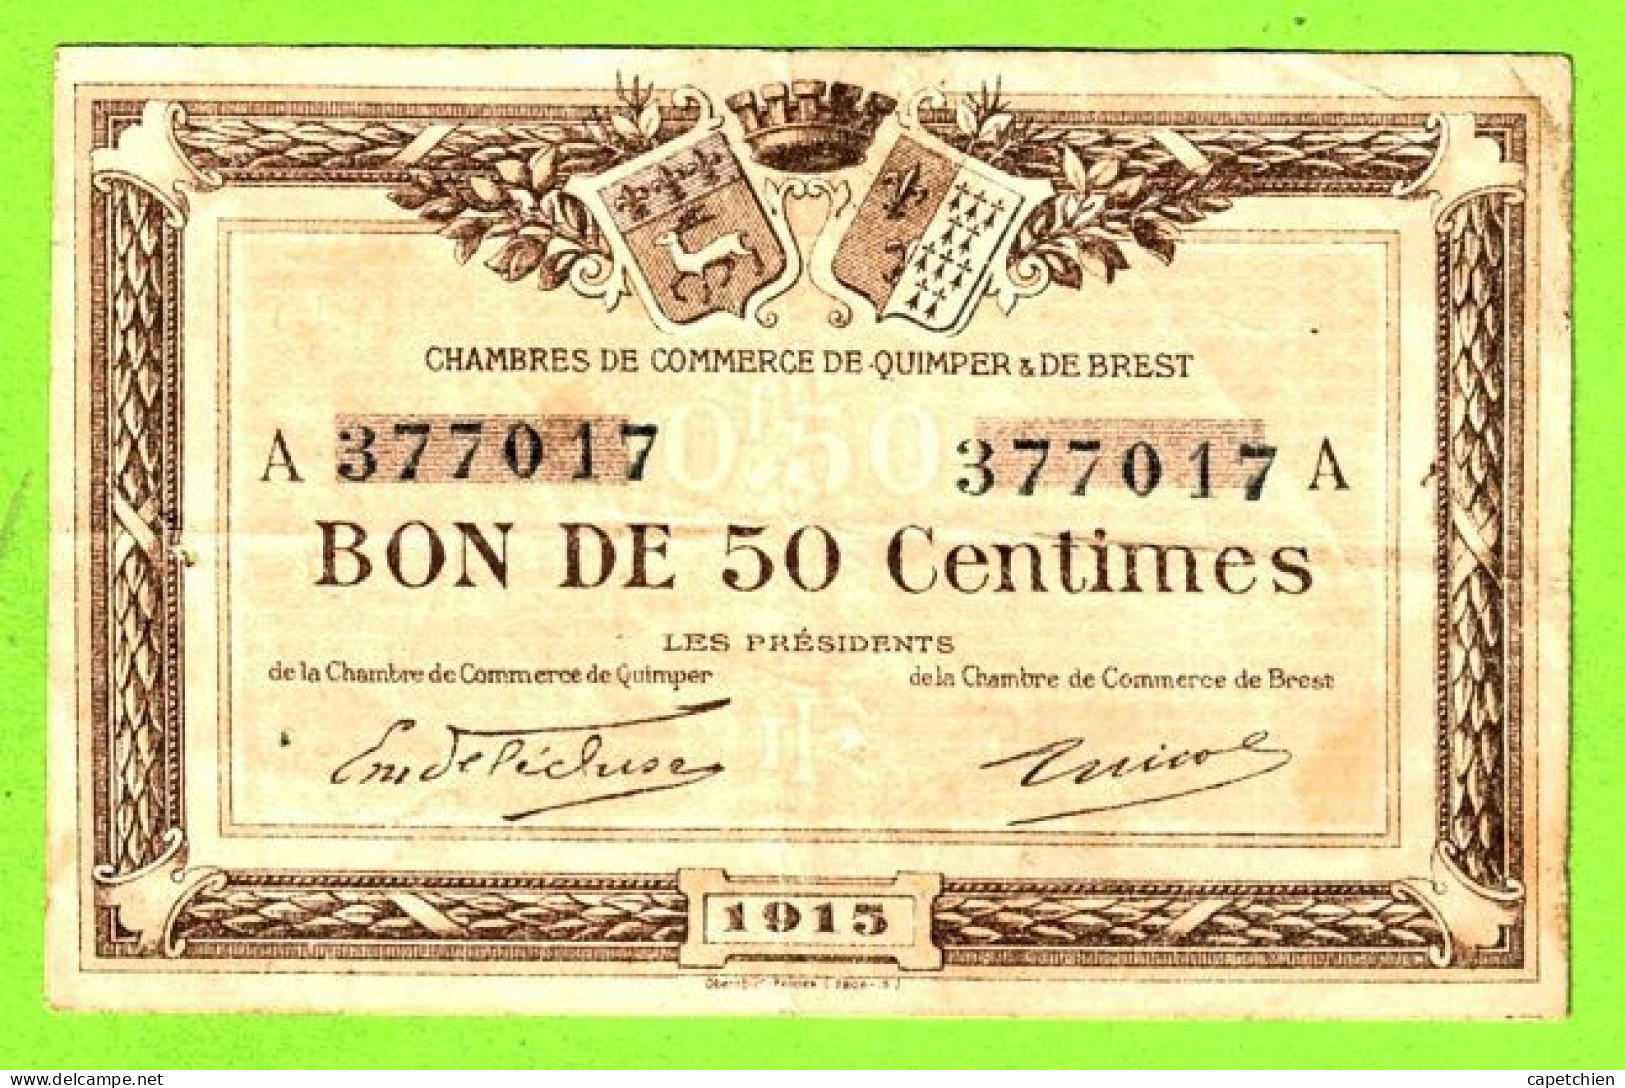 FRANCE/ CHAMBRES DE COMMERCE QUIMPER & BREST/ BON De 50 CENT. / 1915  377017 SERIE A - Handelskammer